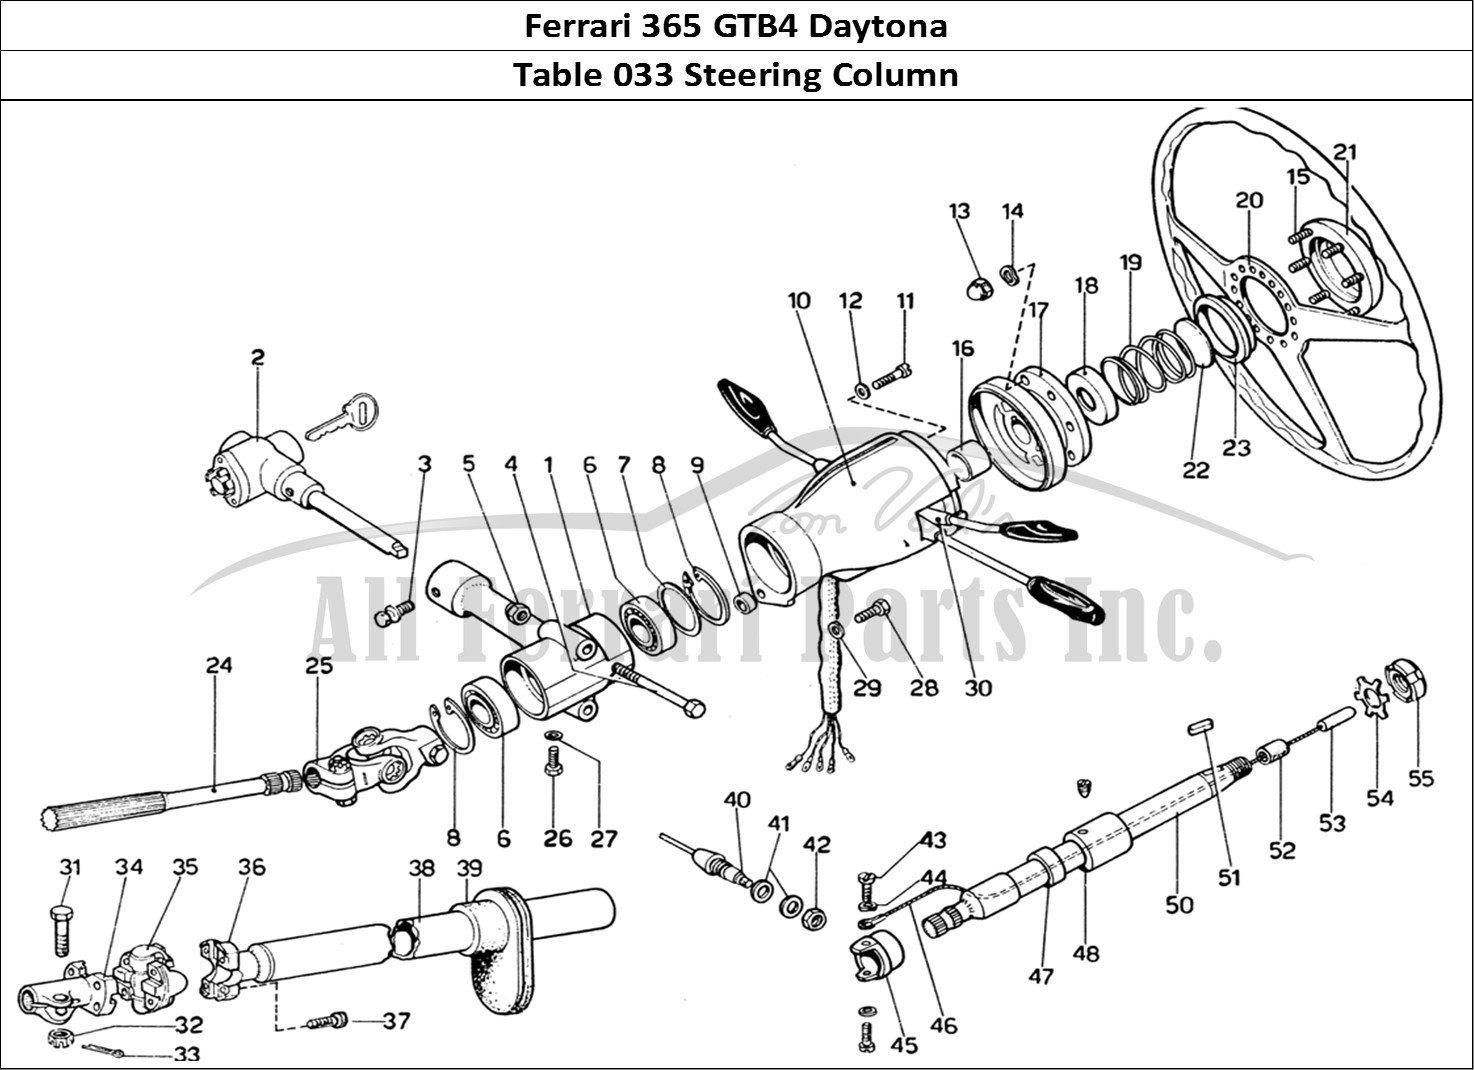 Ferrari Parts Ferrari 365 GTB4 Daytona (1969) Page 033 Steering Control